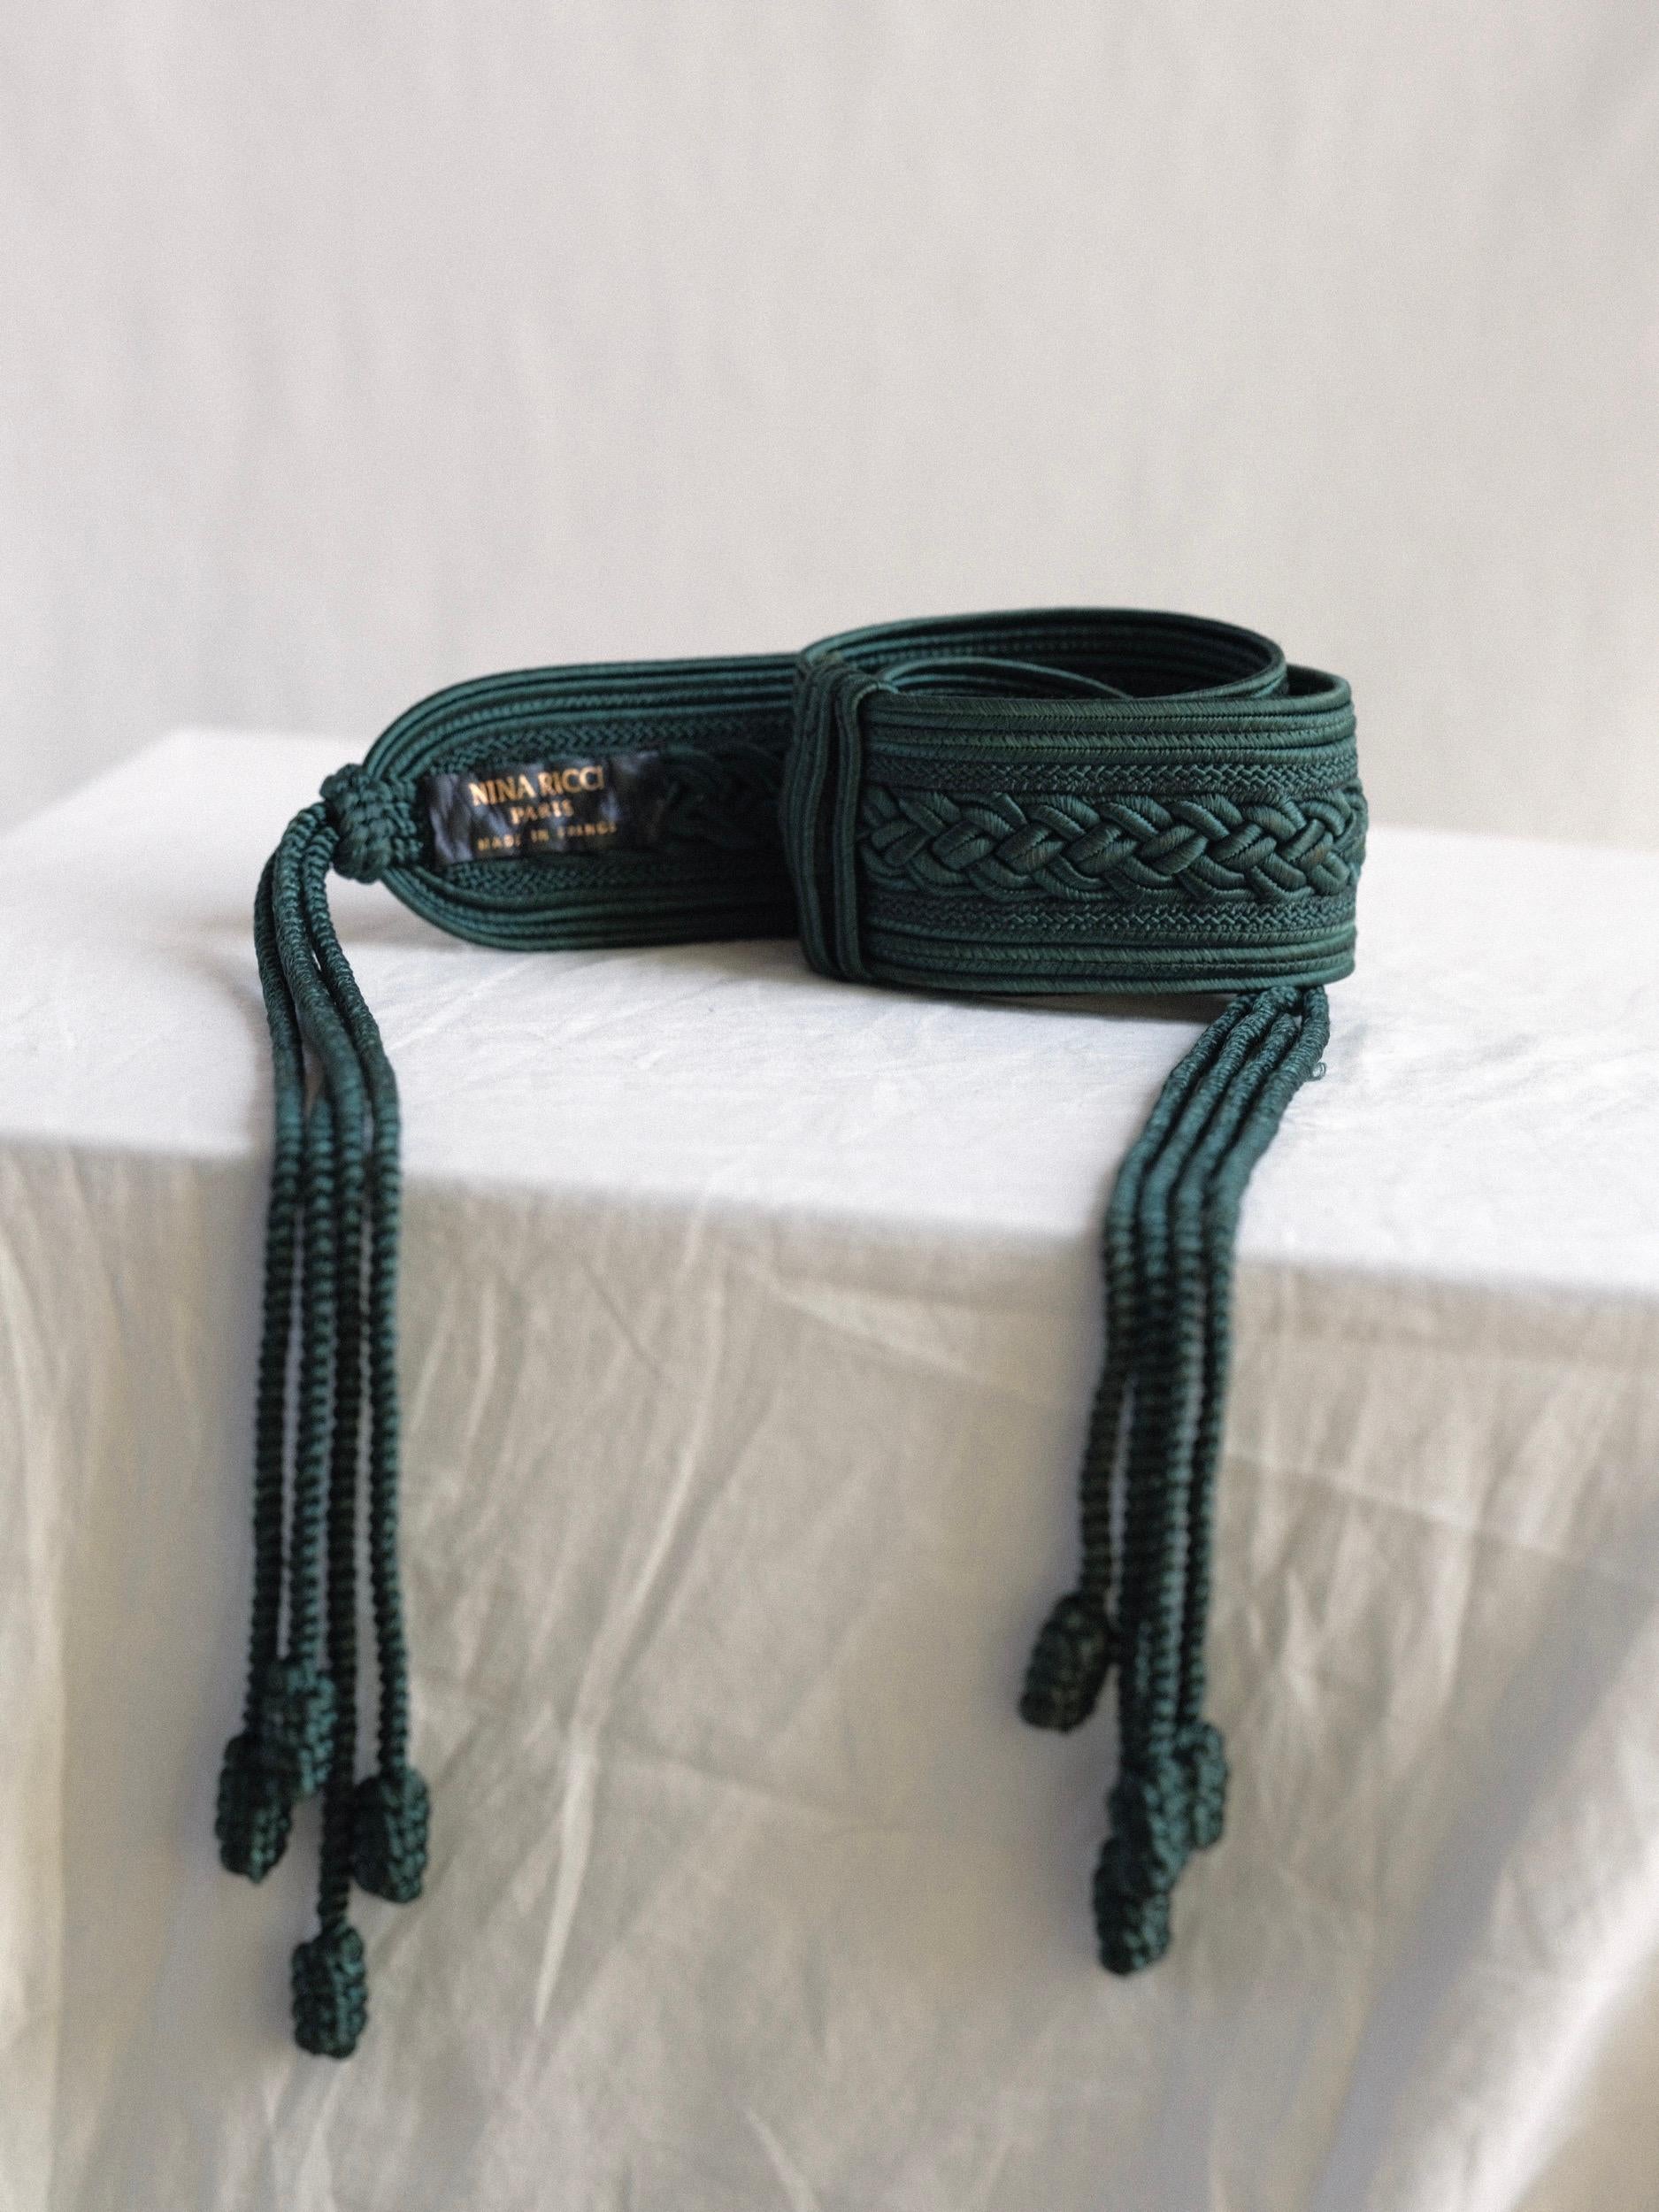 Nina Ricci Passamenterie Belt with Tassels Dark Green 1990's For Sale 7